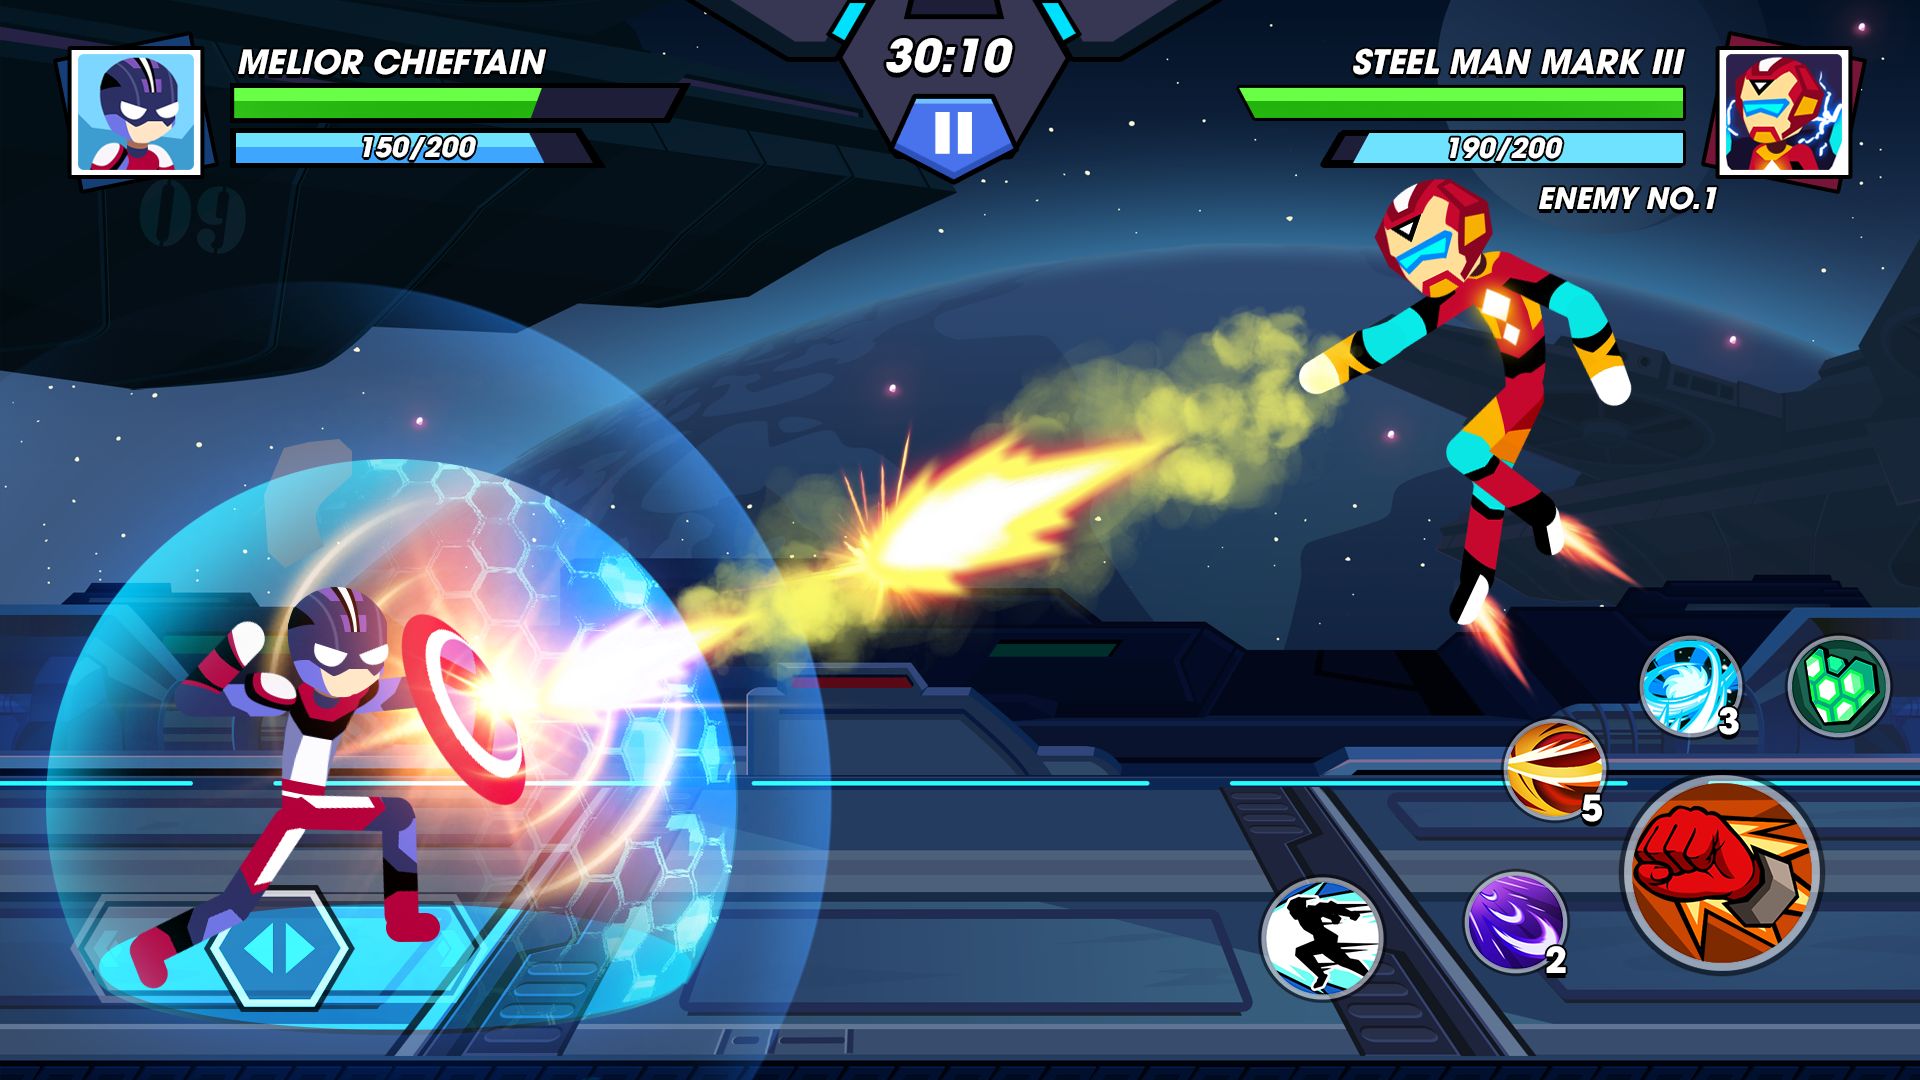 Stickman Fighter Mega Brawl APK (Android Game) - Free Download